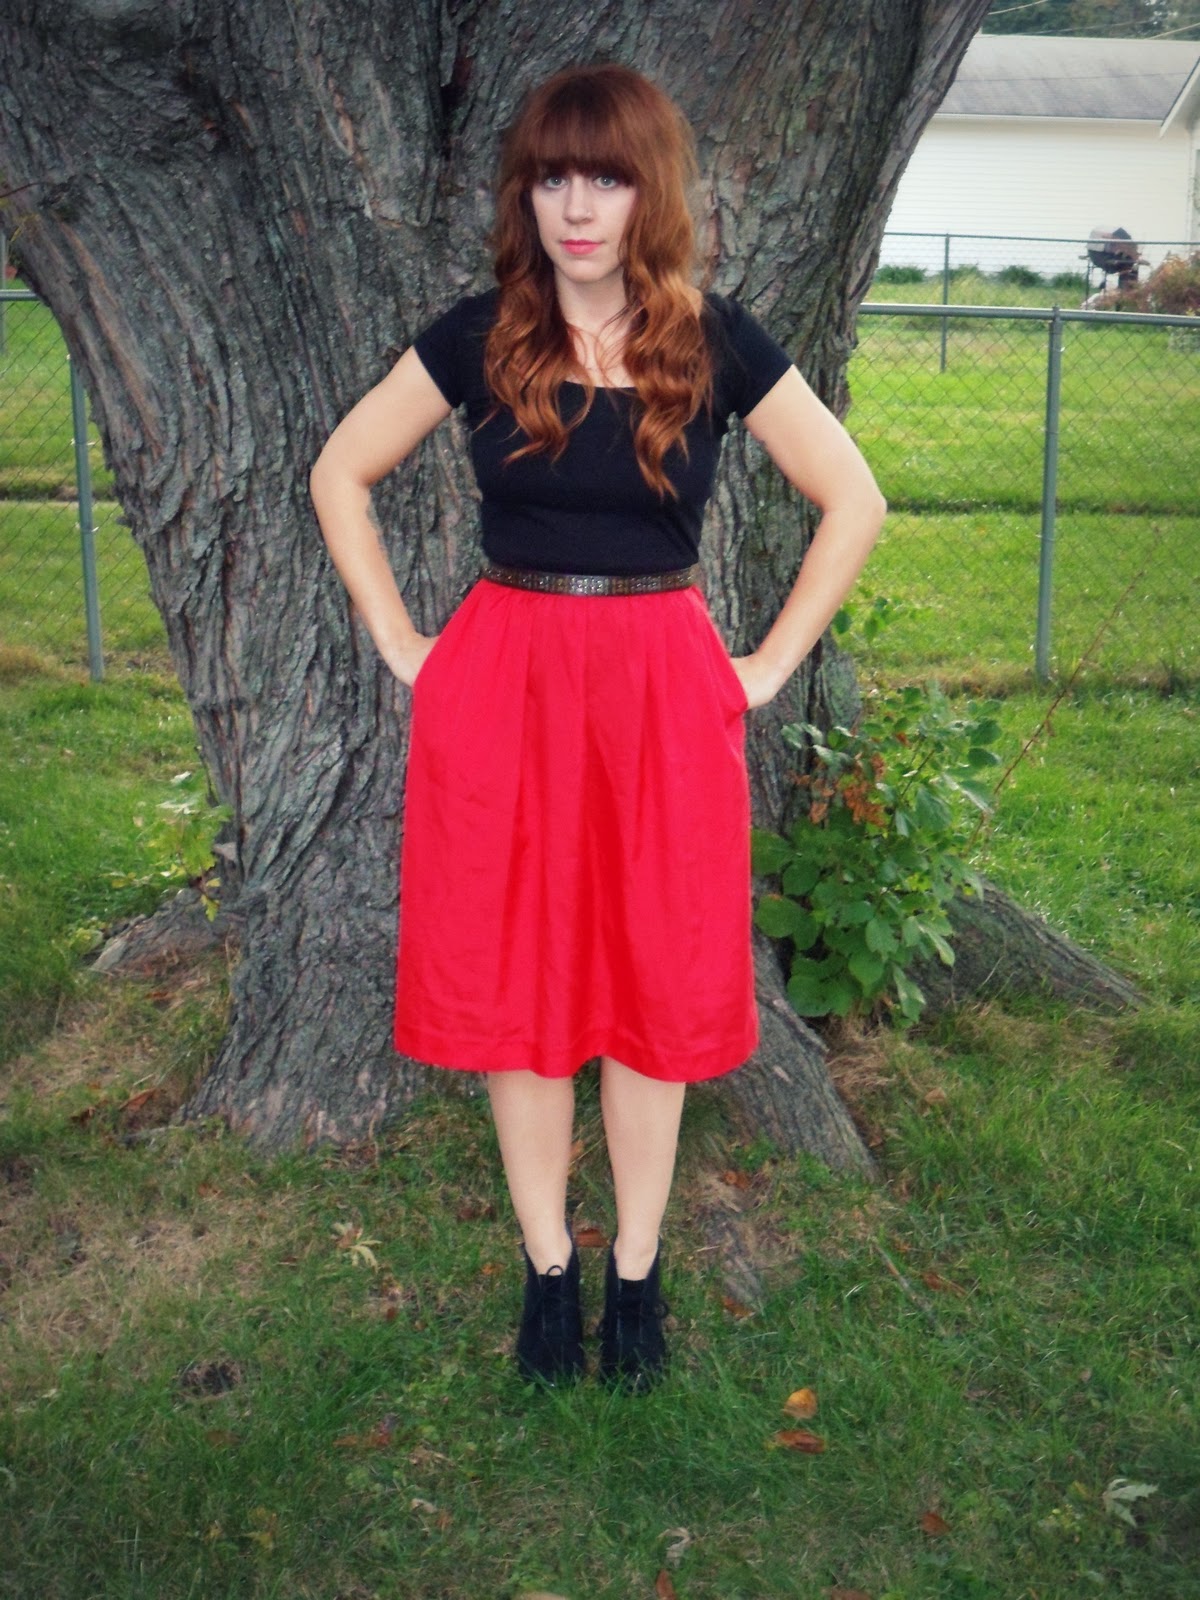 katie did it: My favorite red skirt